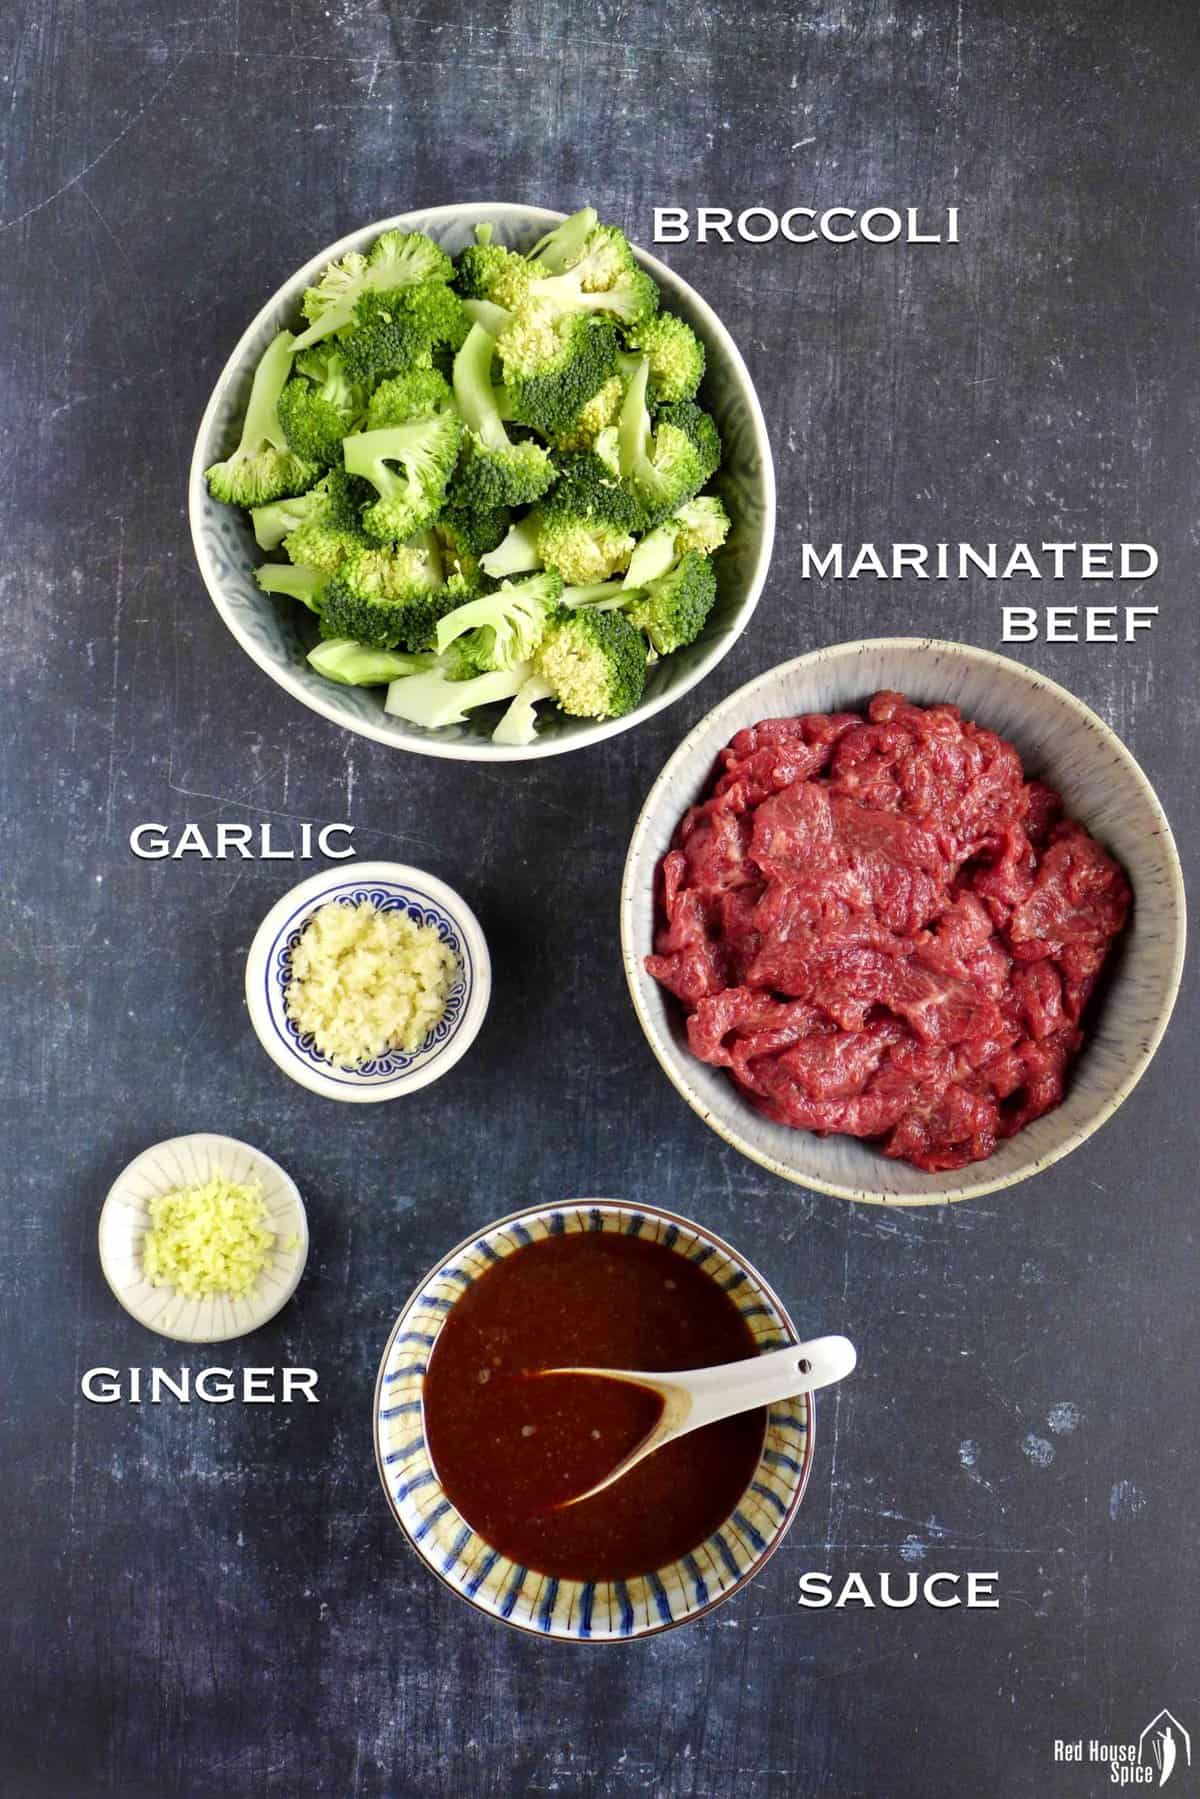 raw broccoli, marinated beef, ginger, garlic and sauce.